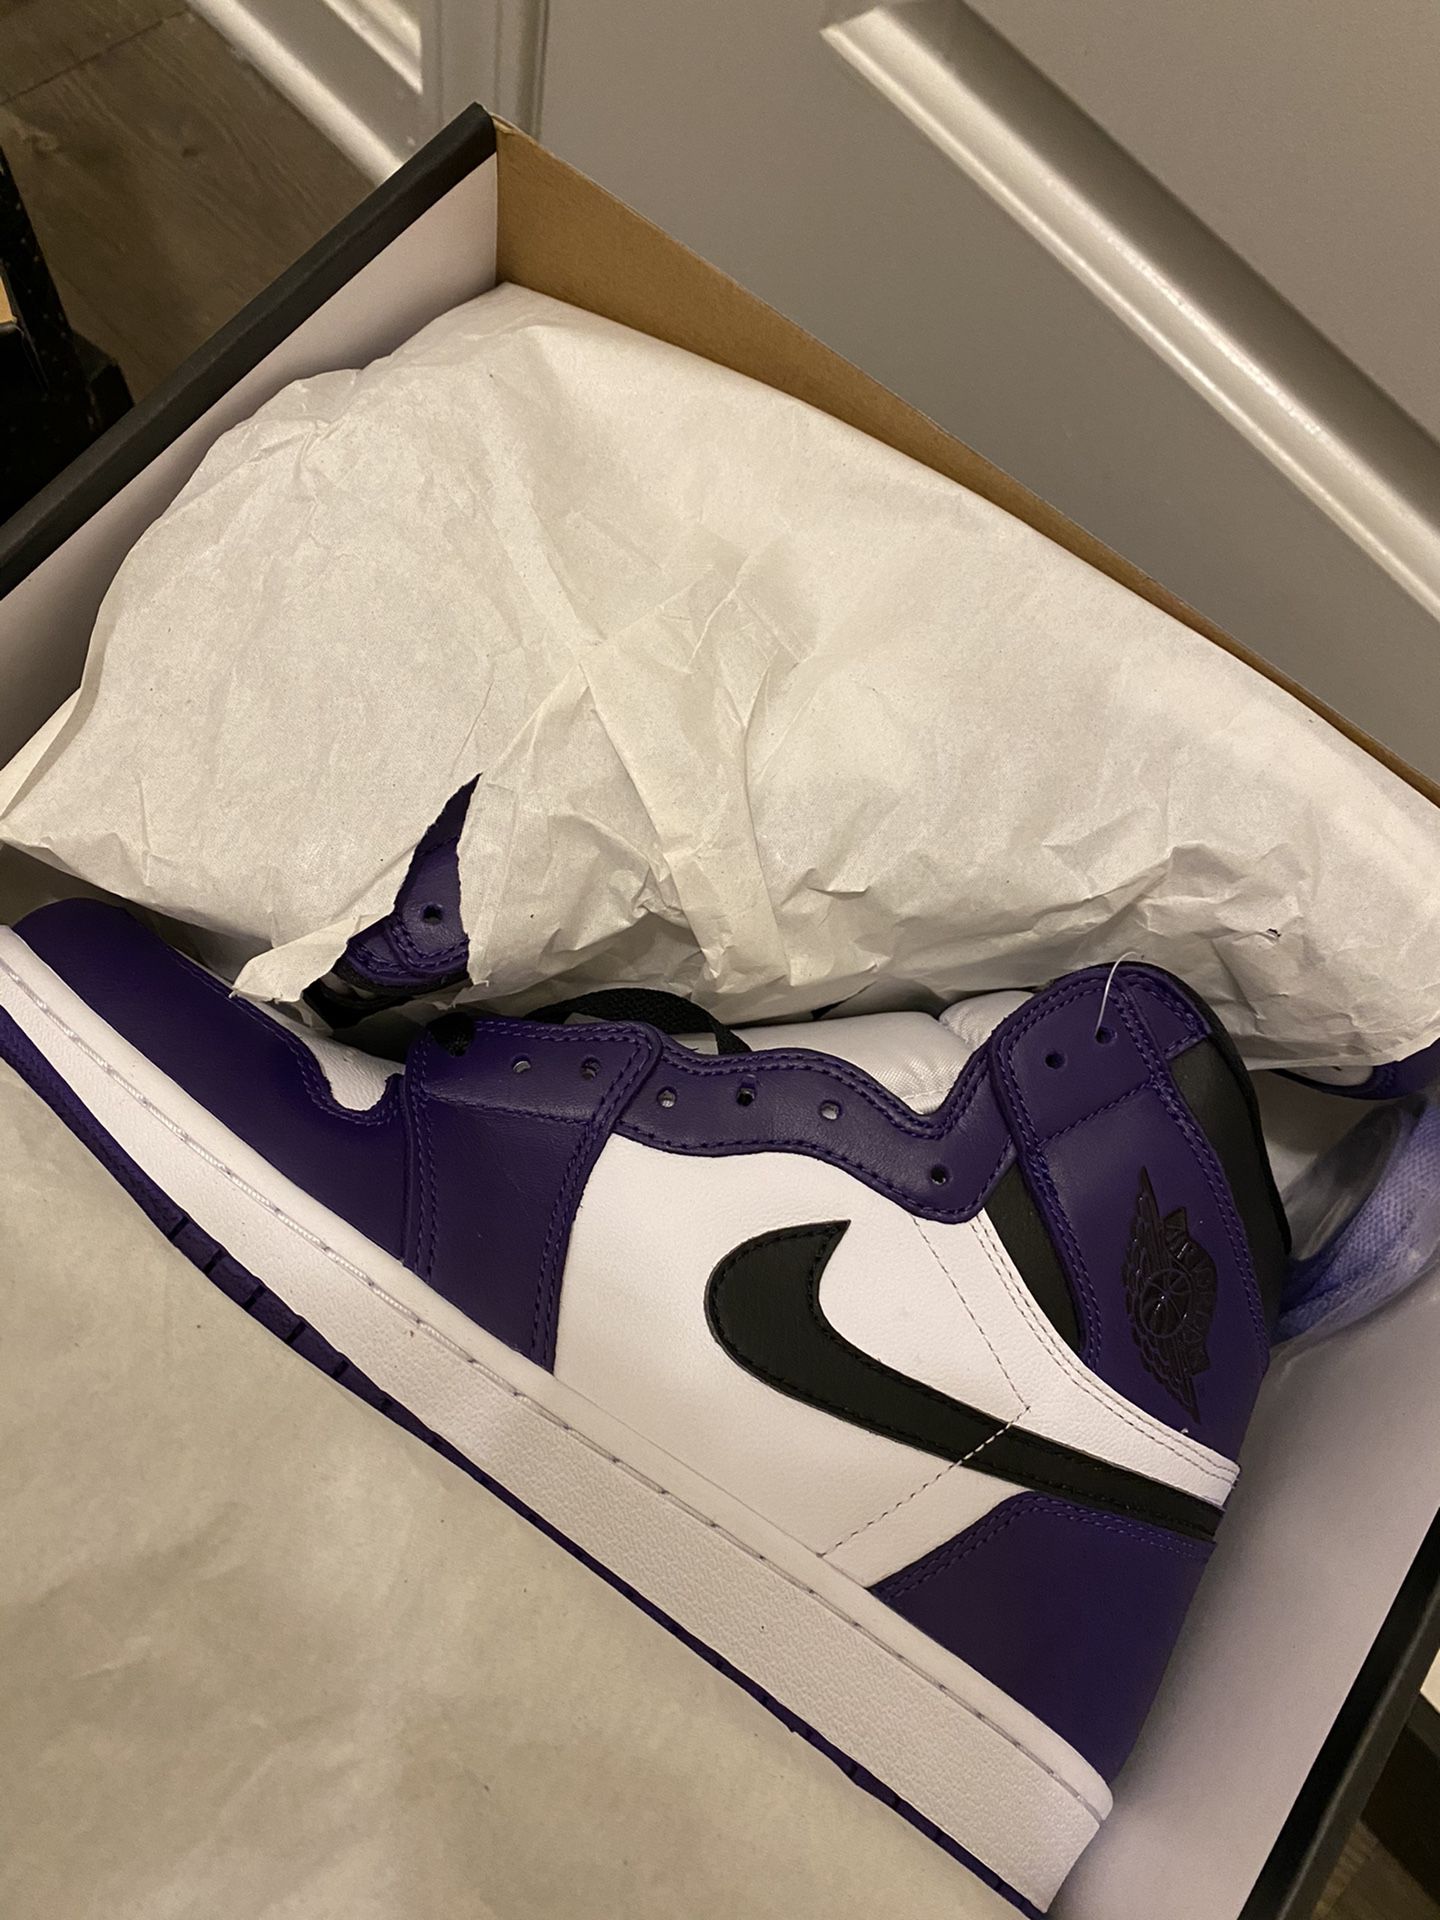 Jordan 1 Court Purple size 9